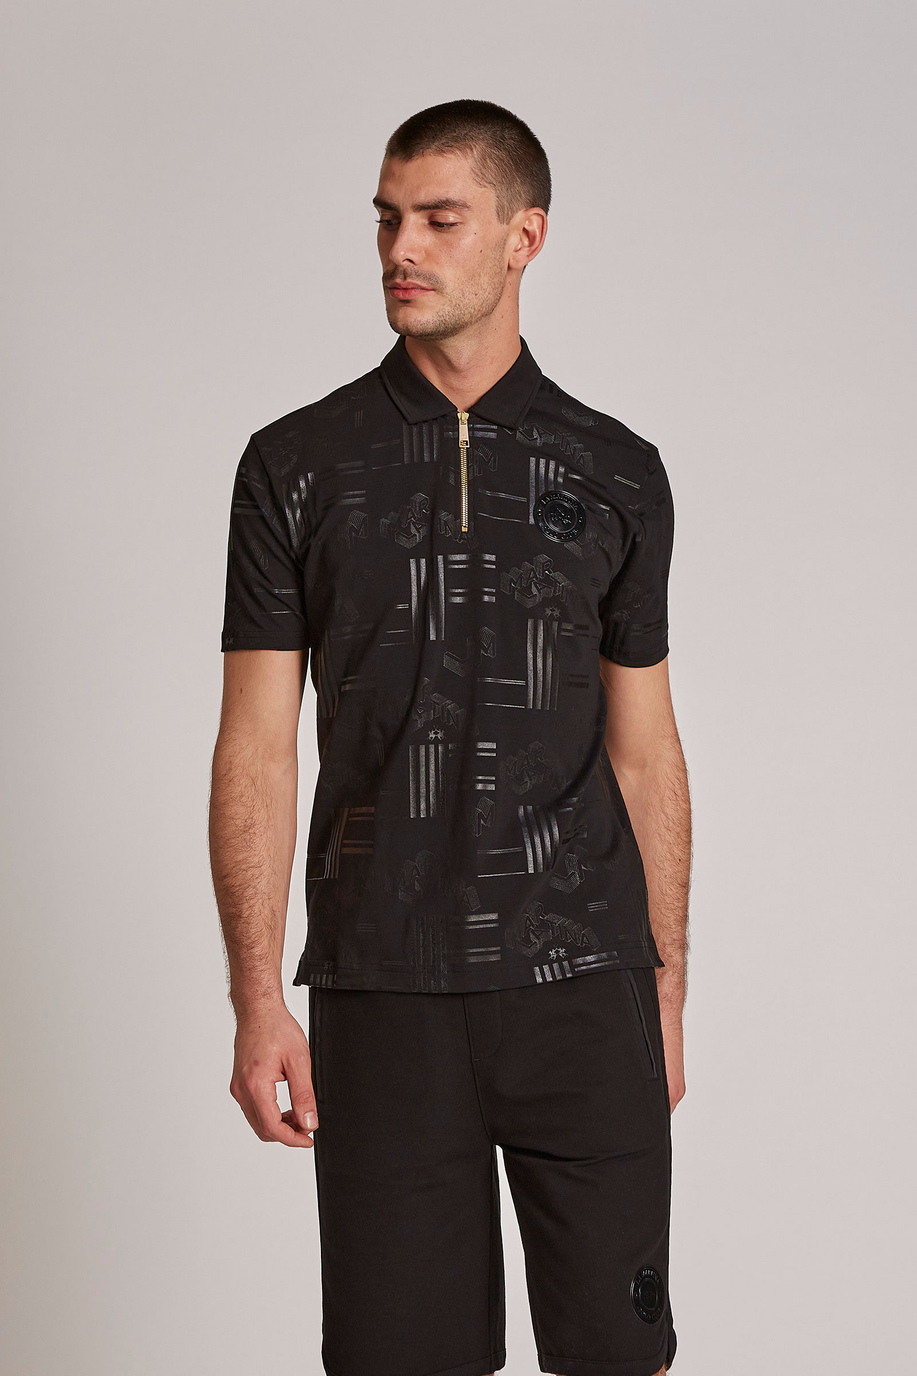 Men's short-sleeved regular-fit stretch cotton polo shirt - Jet Set | La Martina - Official Online Shop